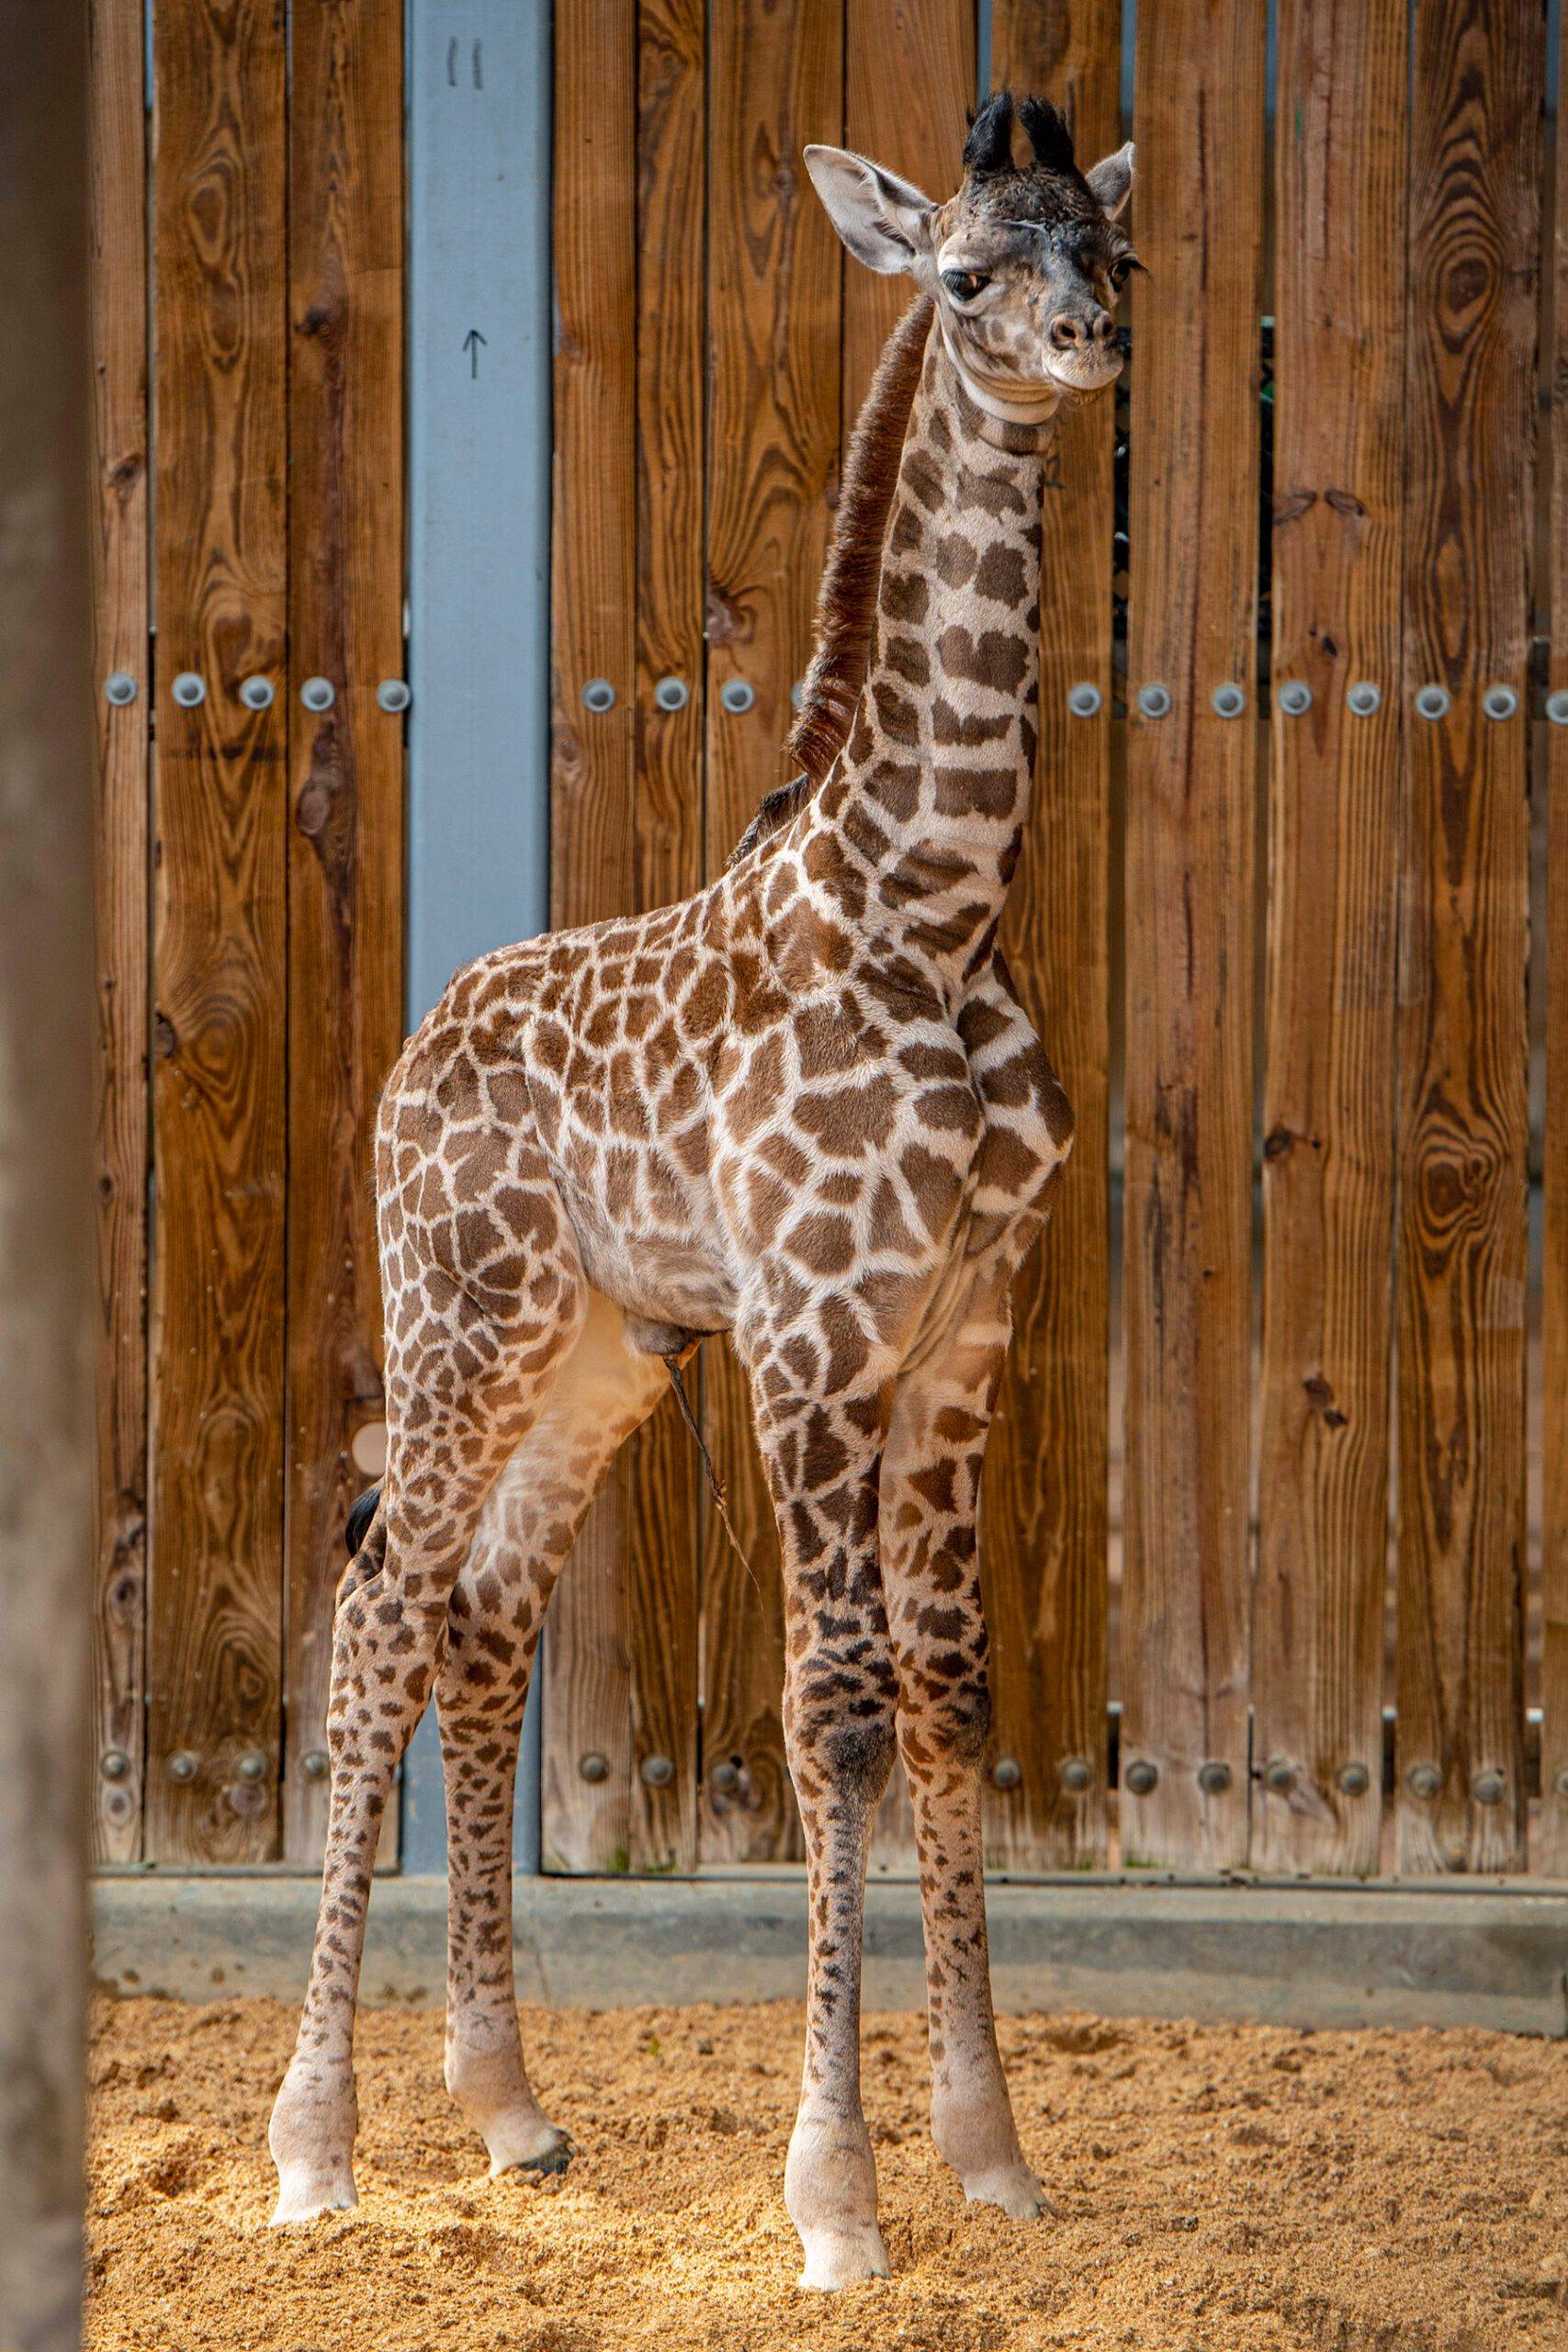 Masai giraffe calf bornJune 10 2021 at Disney's Animal Kingdom